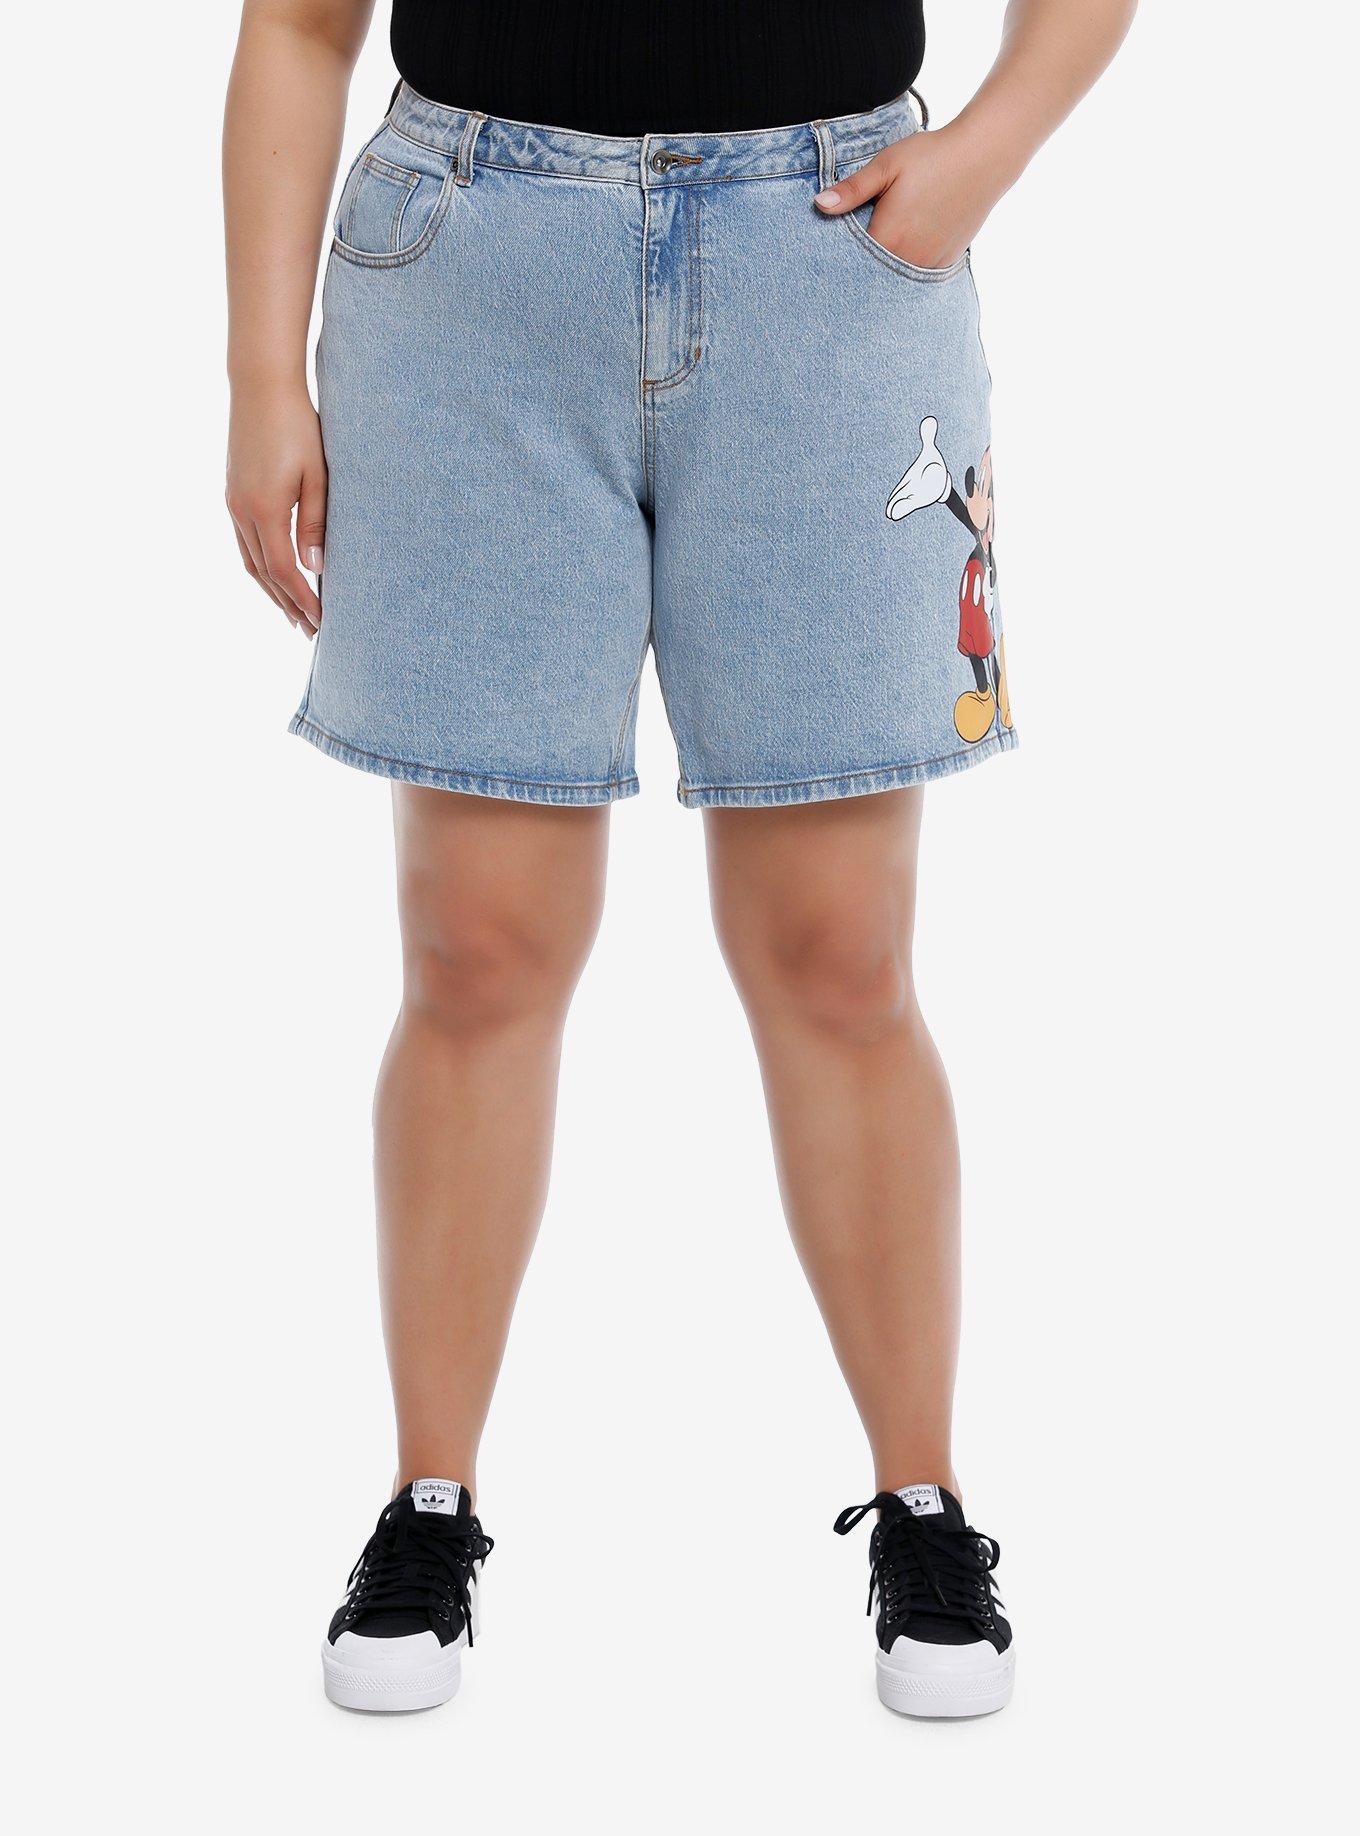 Disney Mickey Mouse Bermuda Jean Shorts Plus Size, LIGHT WASH, hi-res